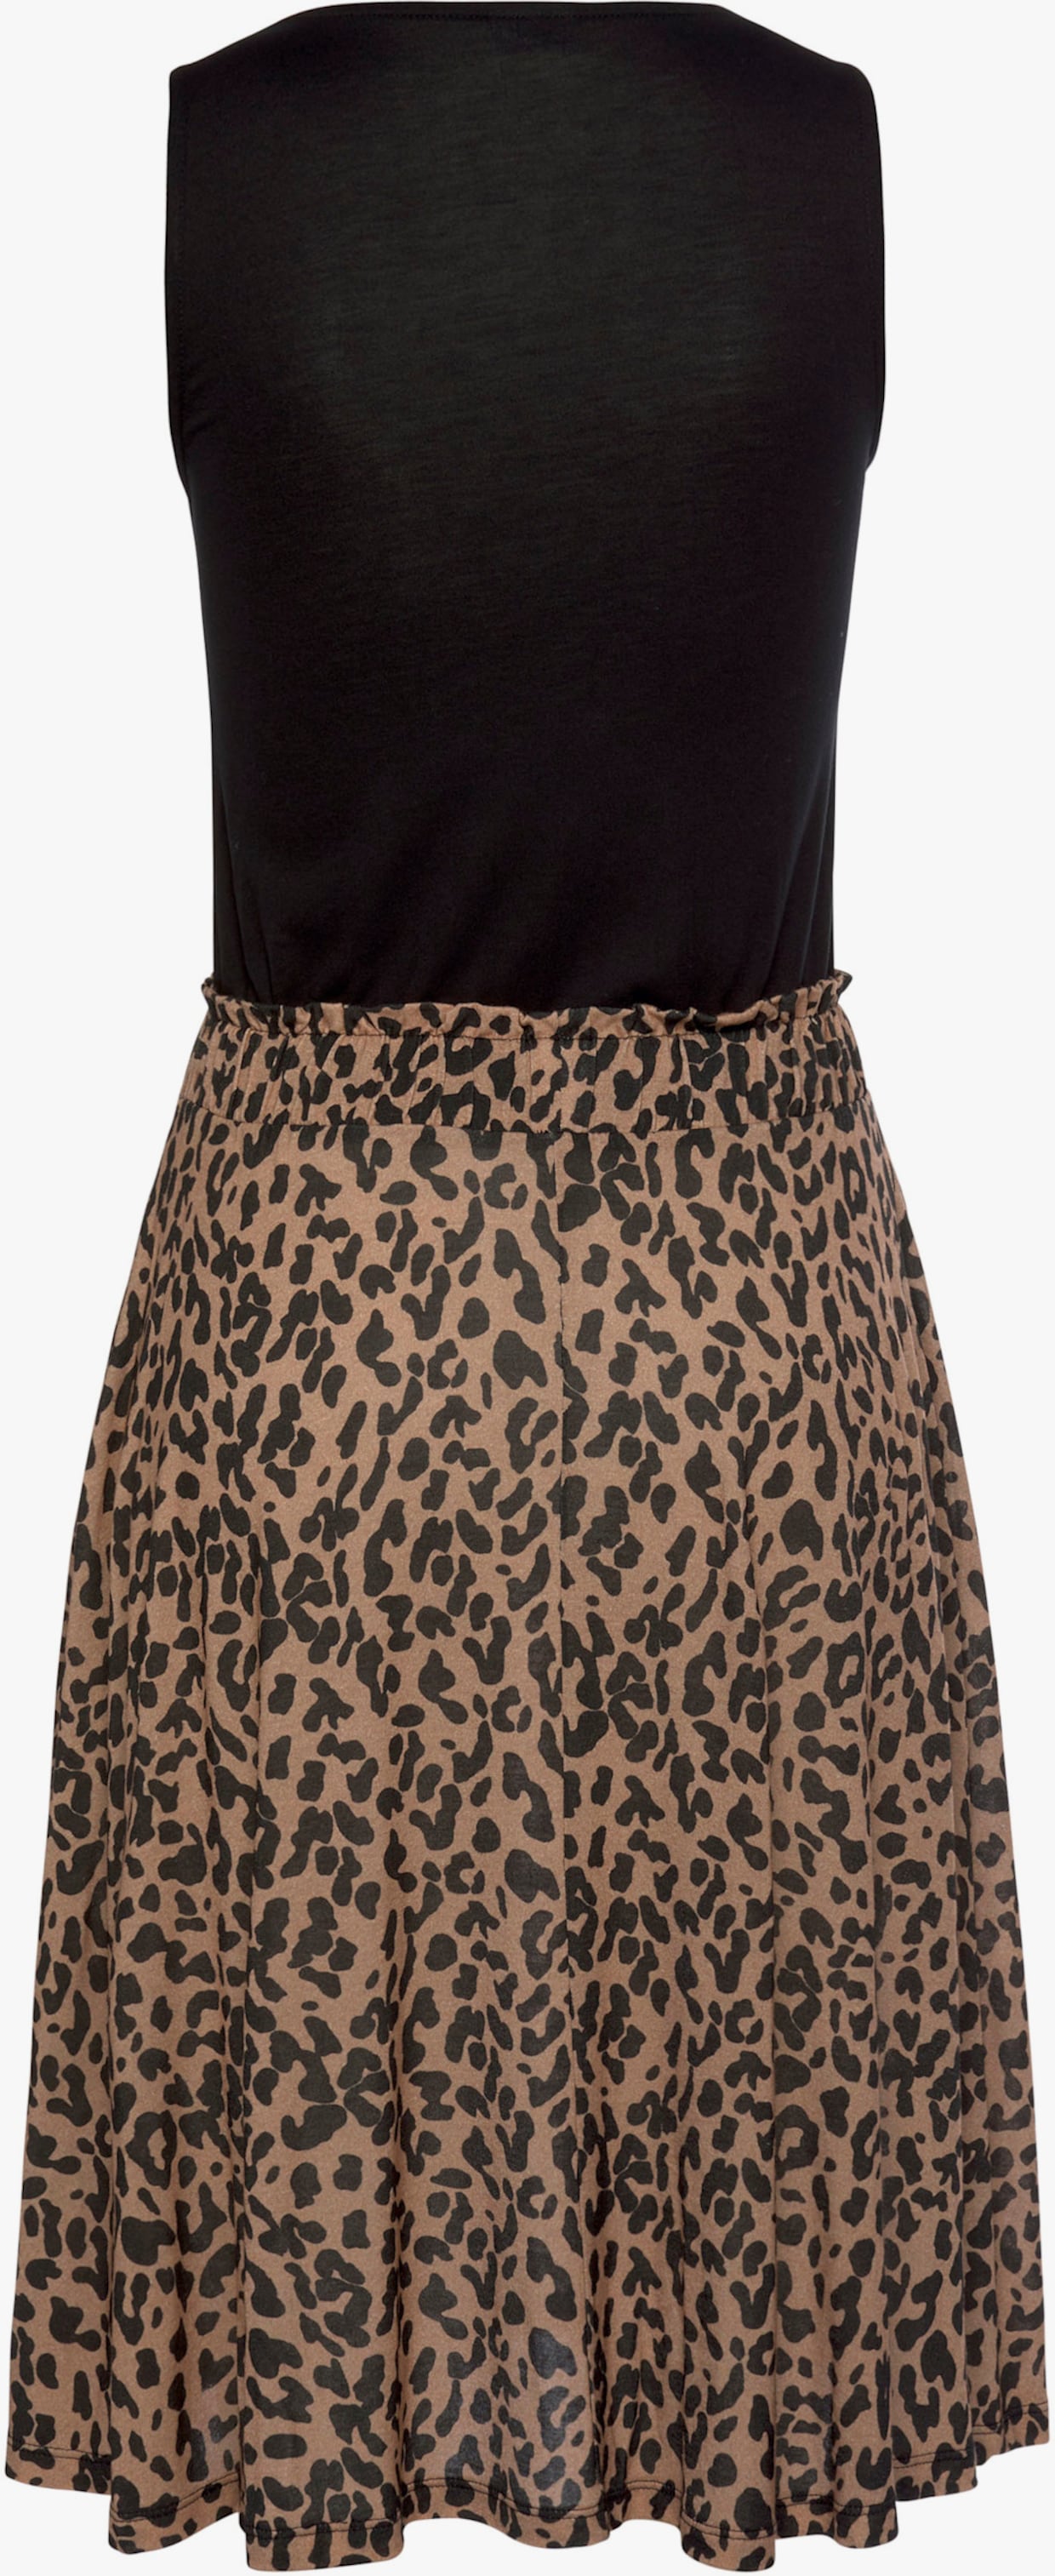 Buffalo Jersey jurk - zwart/luipaard bedrukt